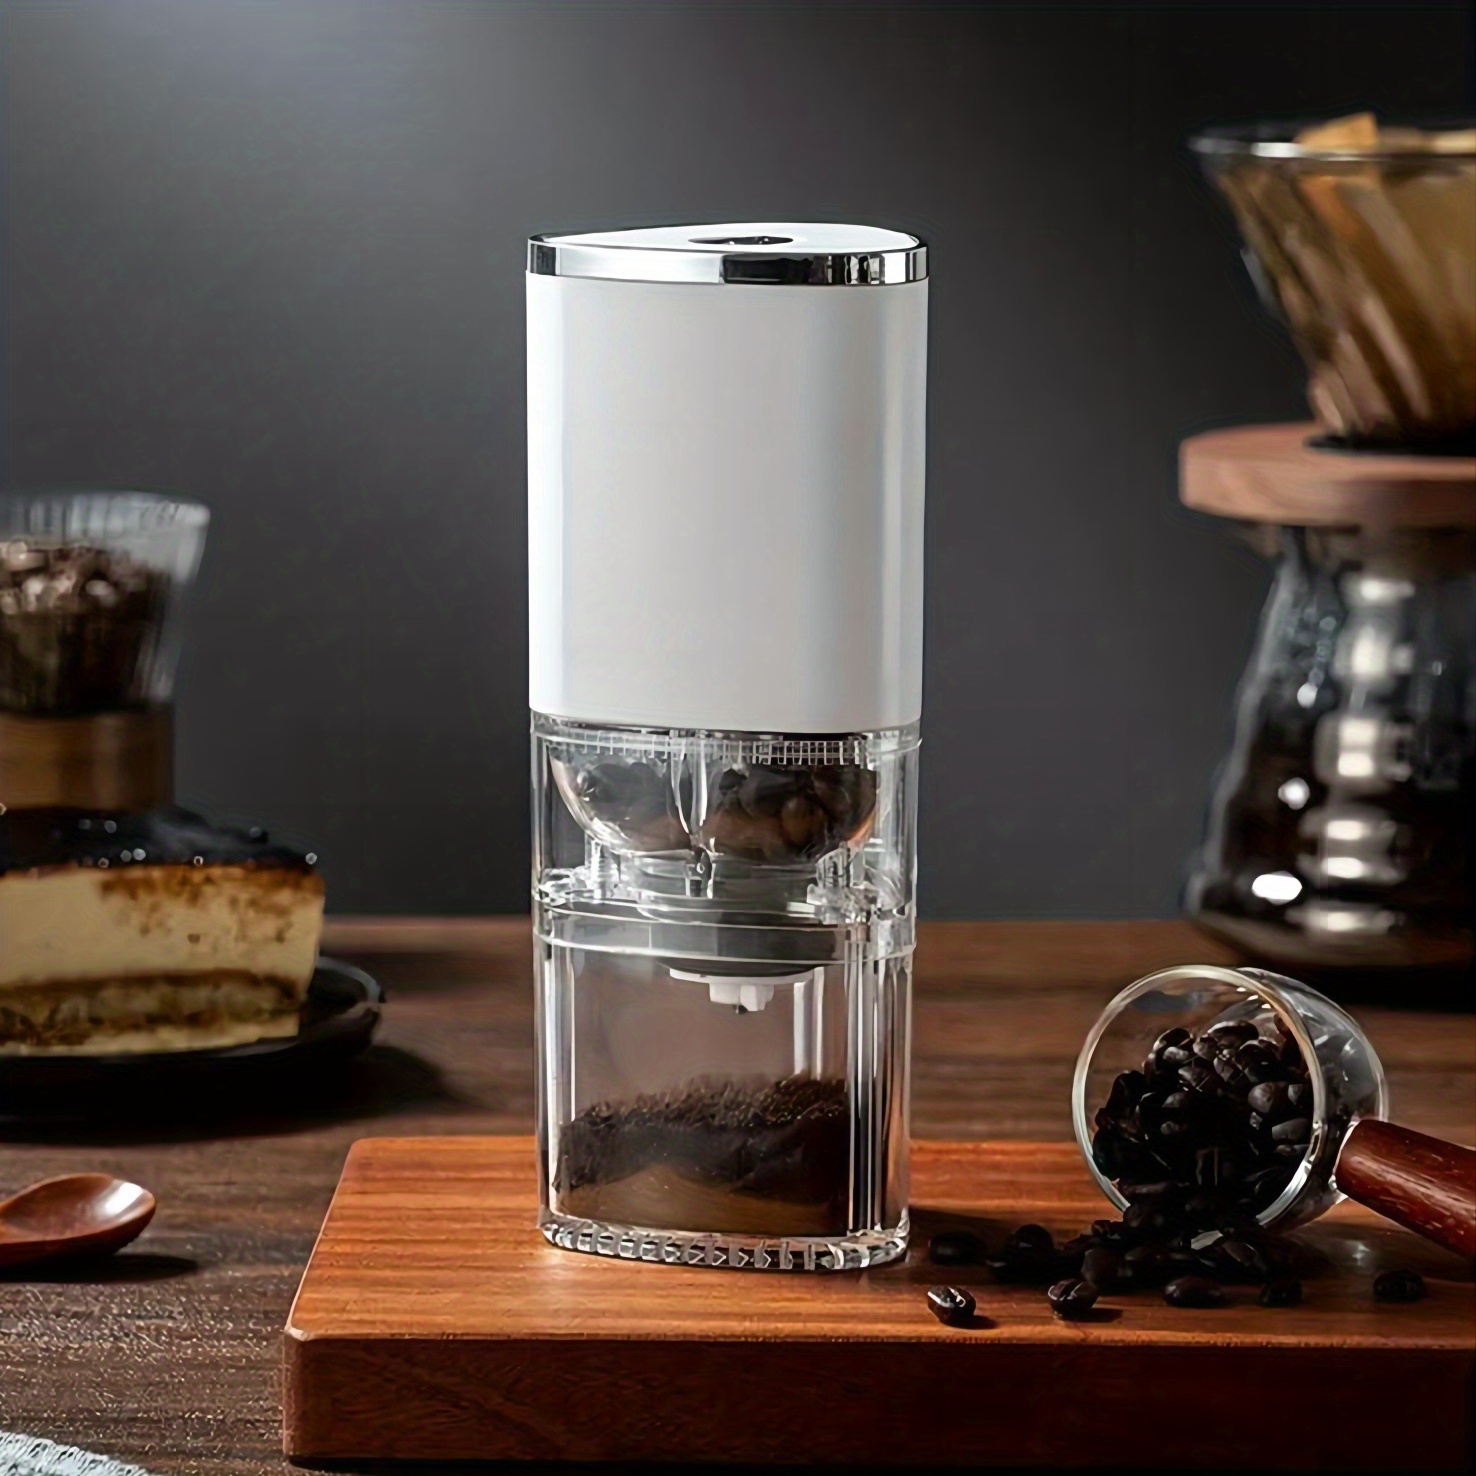 Nueve&Five Adjustable Coffee Grinder Electric, Cordless Coffee